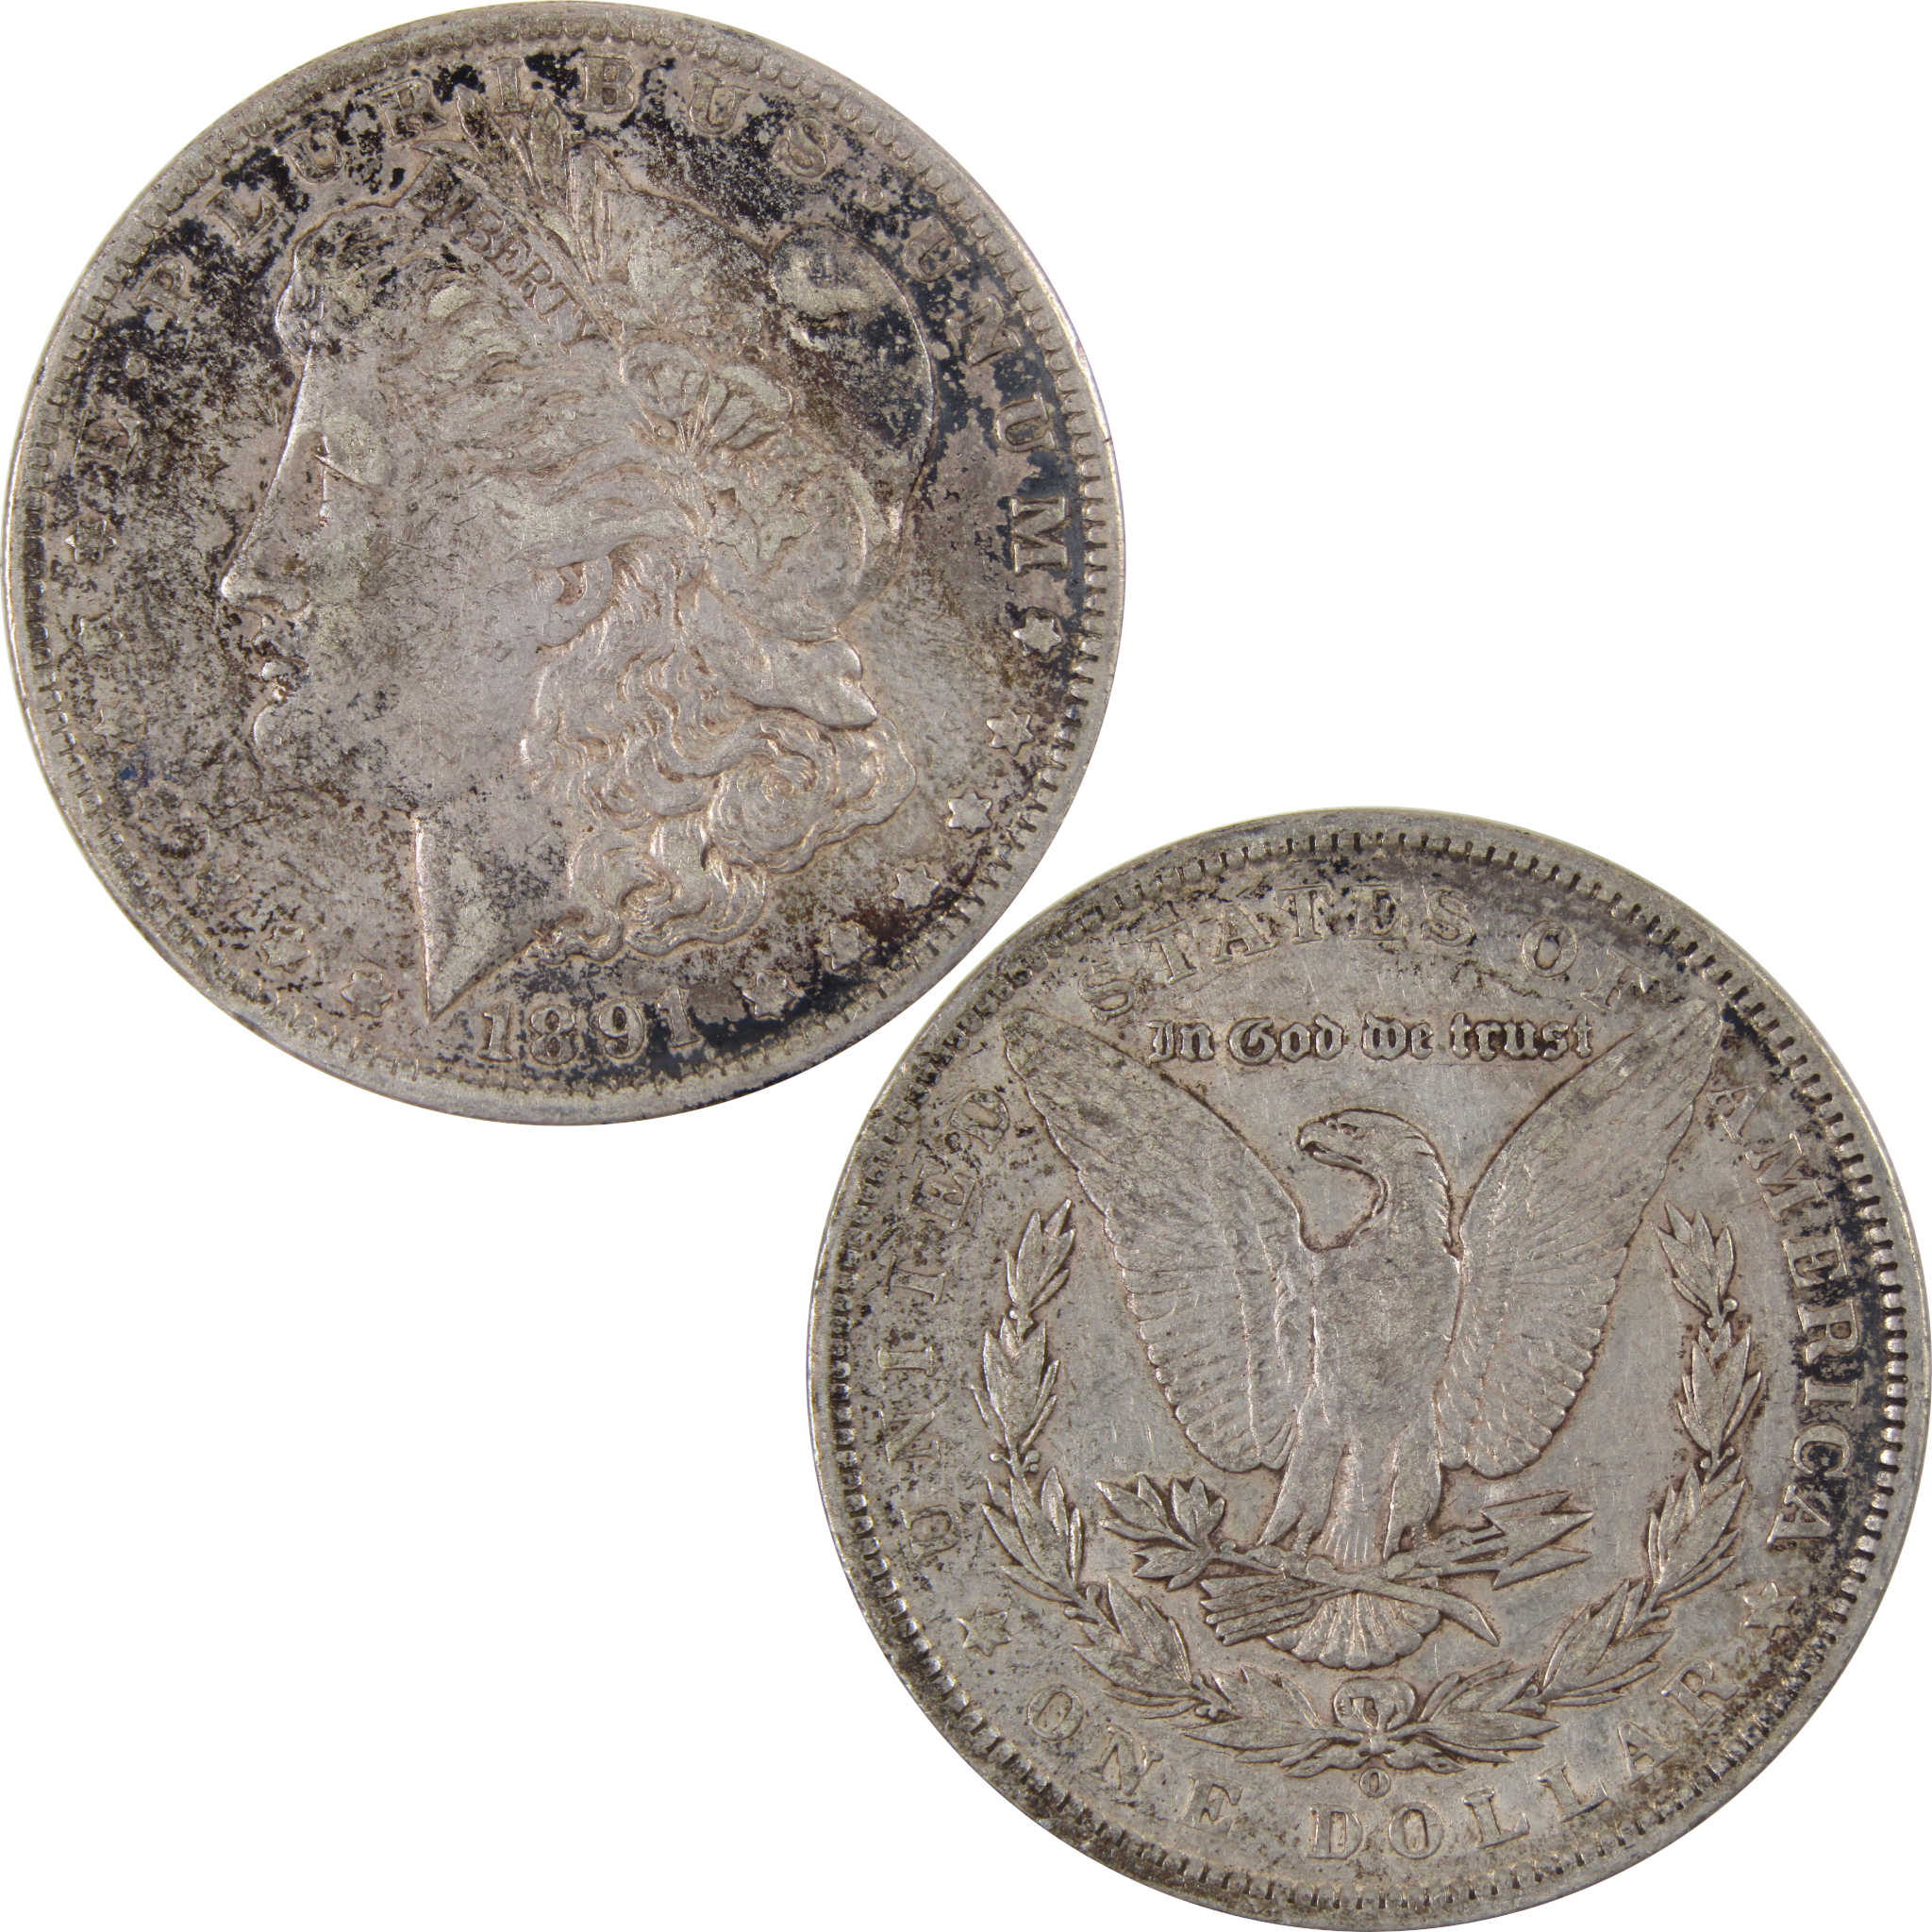 1891 O Morgan Dollar VF Very Fine 90% Silver US Coin SKU:I2807 - Morgan coin - Morgan silver dollar - Morgan silver dollar for sale - Profile Coins &amp; Collectibles